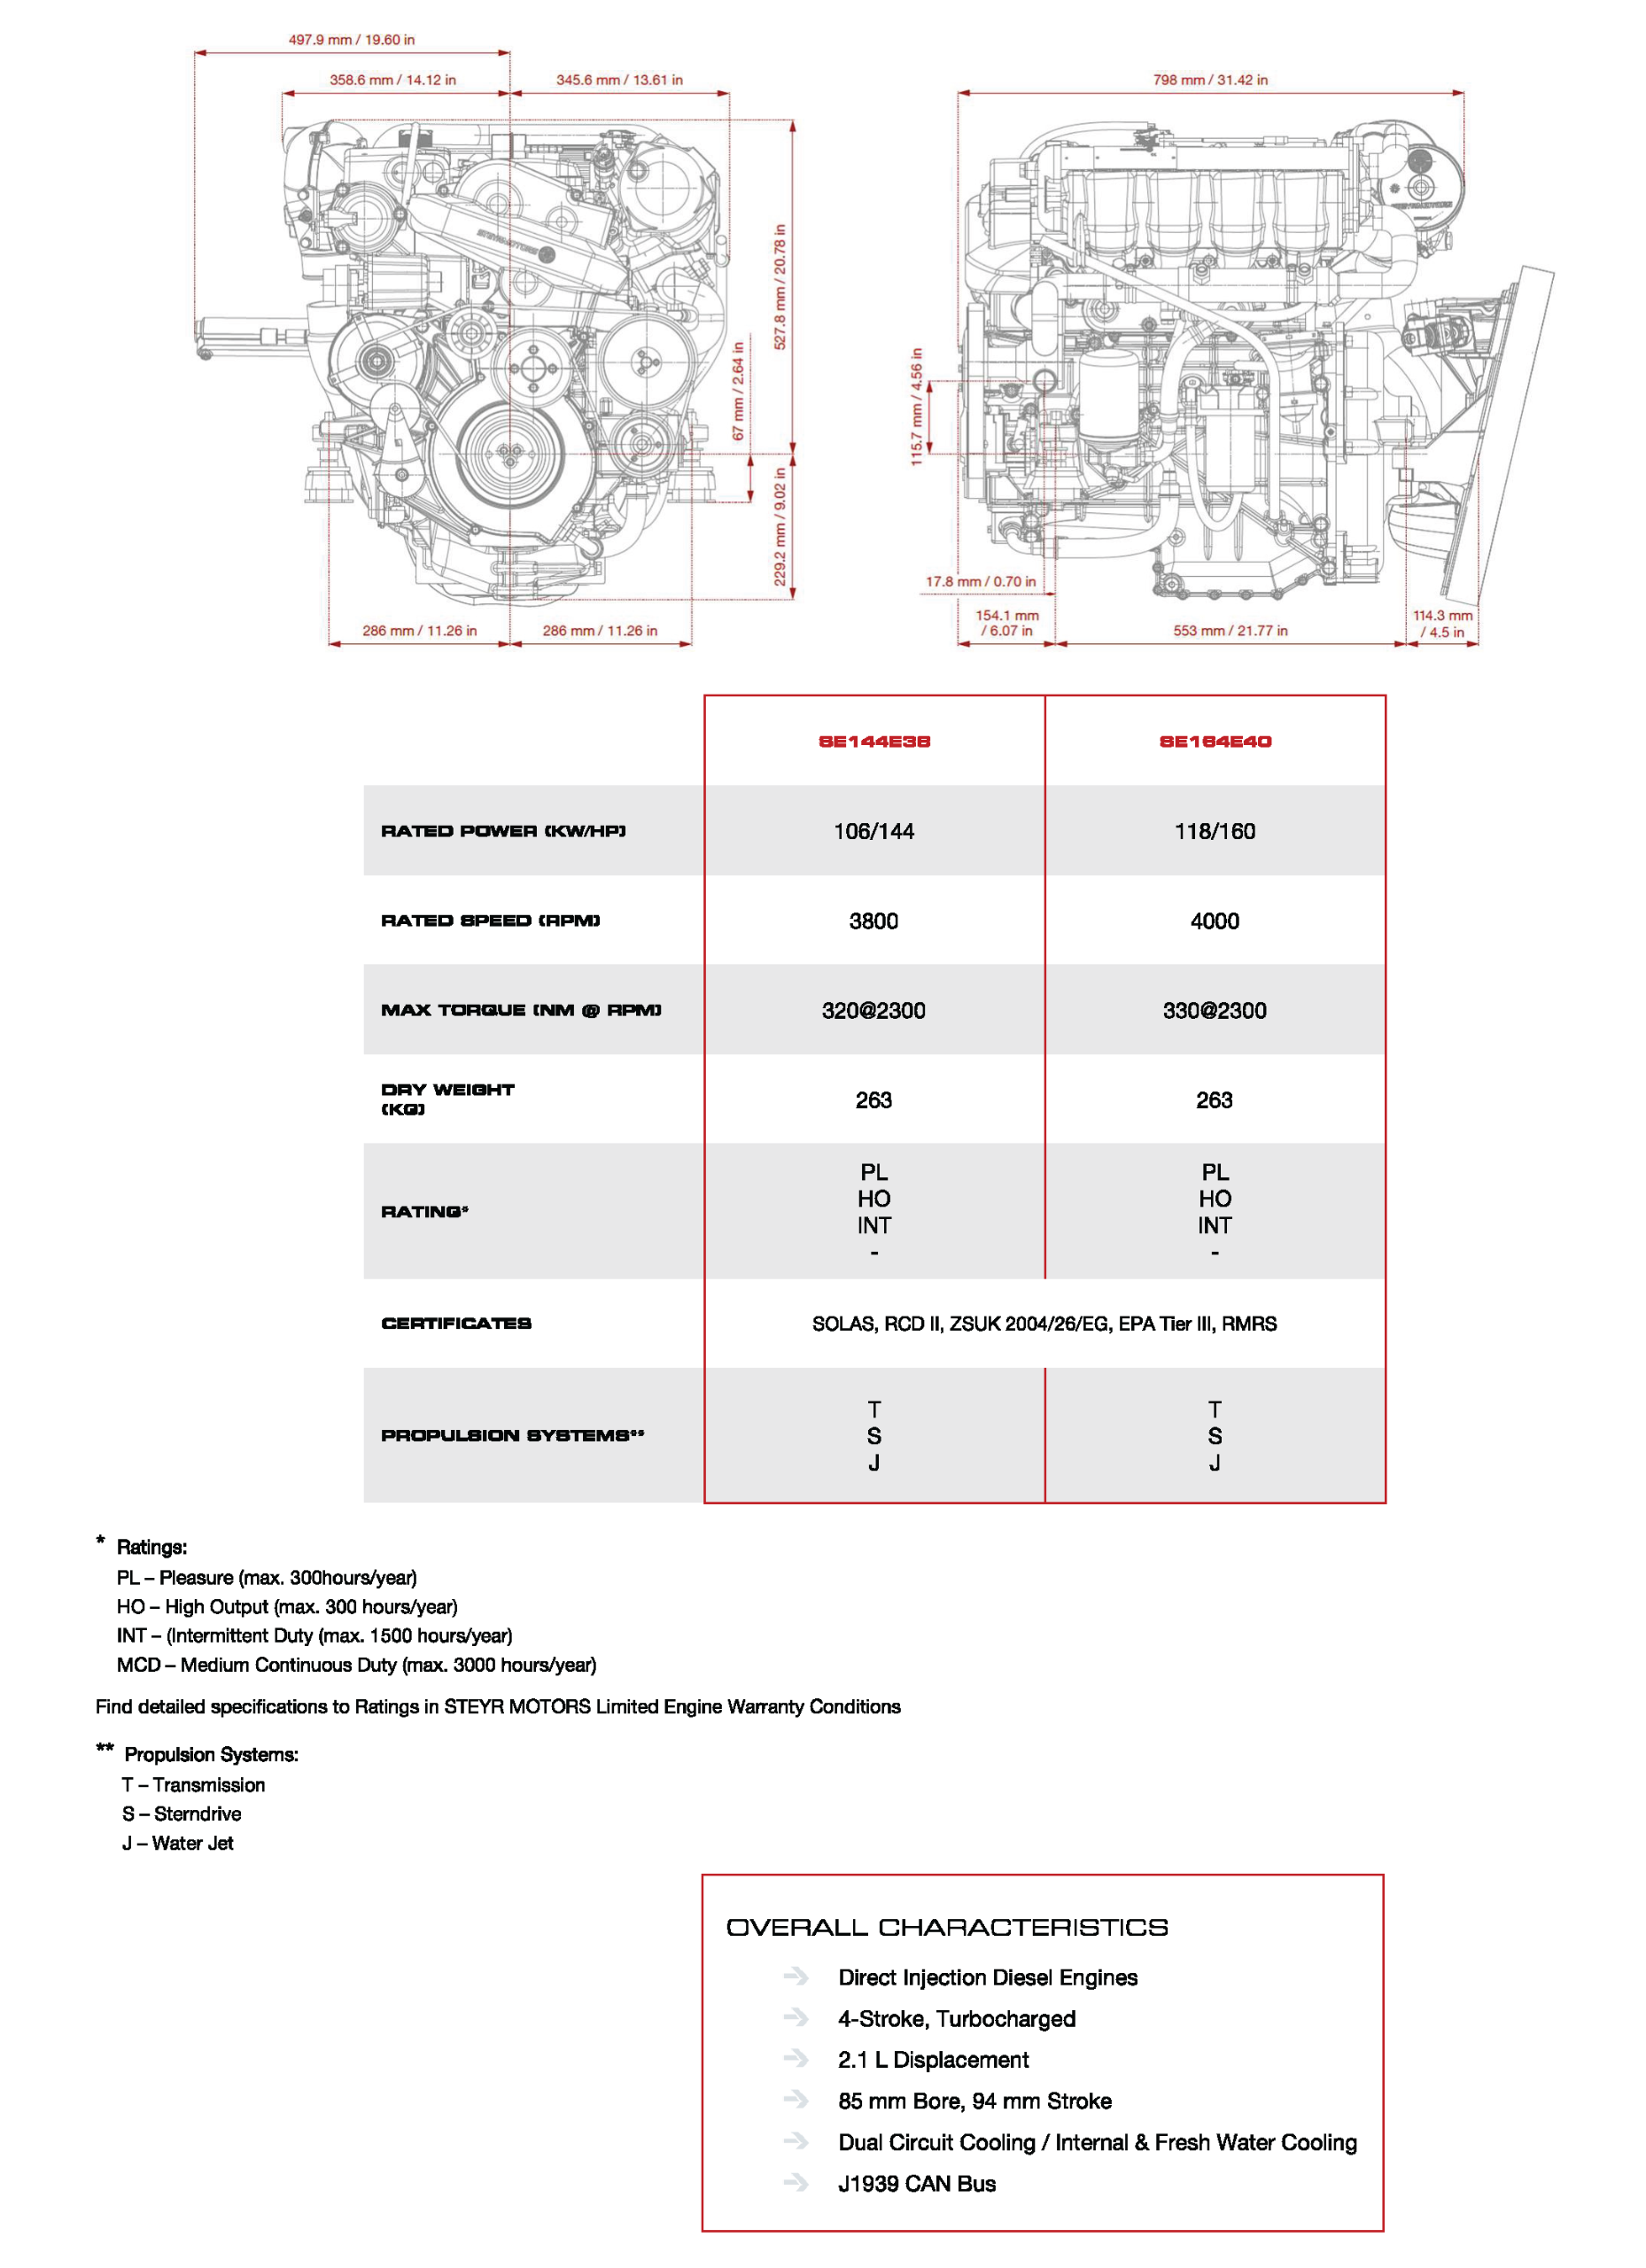 SE-4 CYL specs sheet